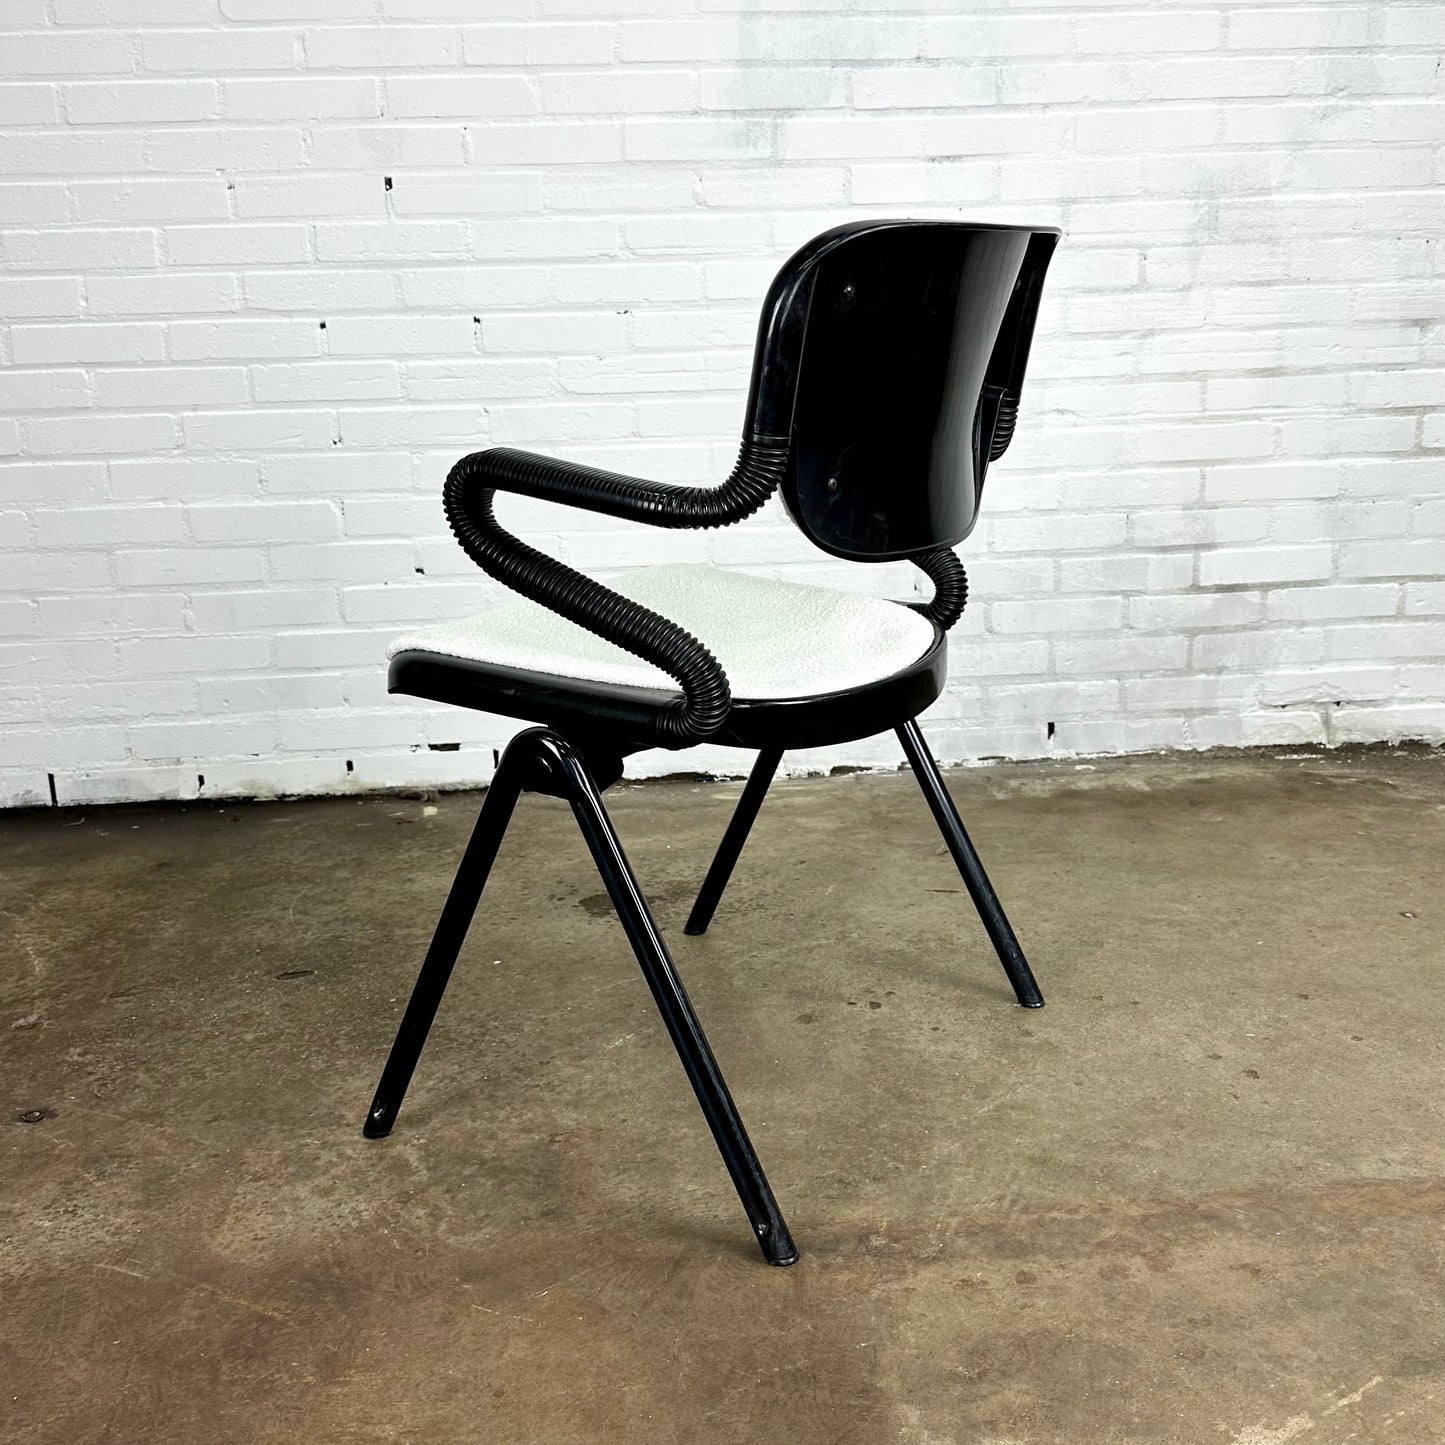 Vertebra chairs by Emilio Ambasz & Giancarlo Piretti (2 pieces available)